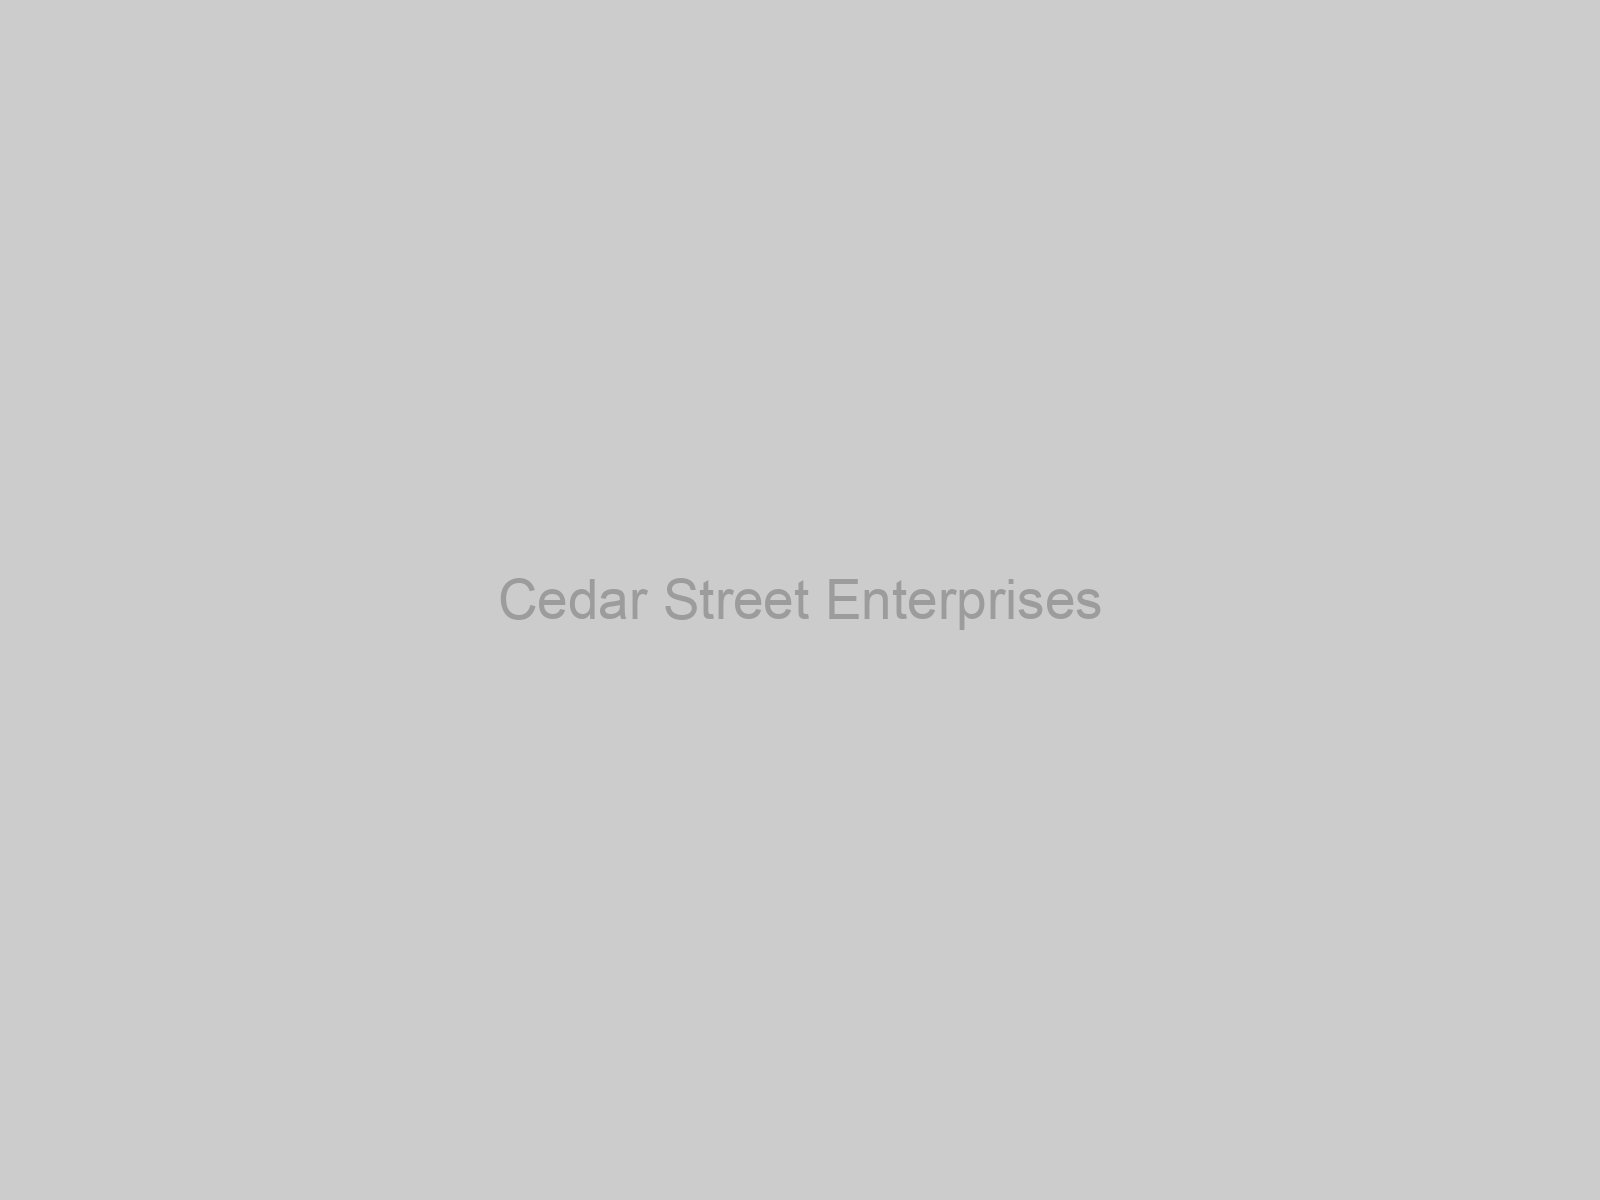 Cedar Street Enterprises